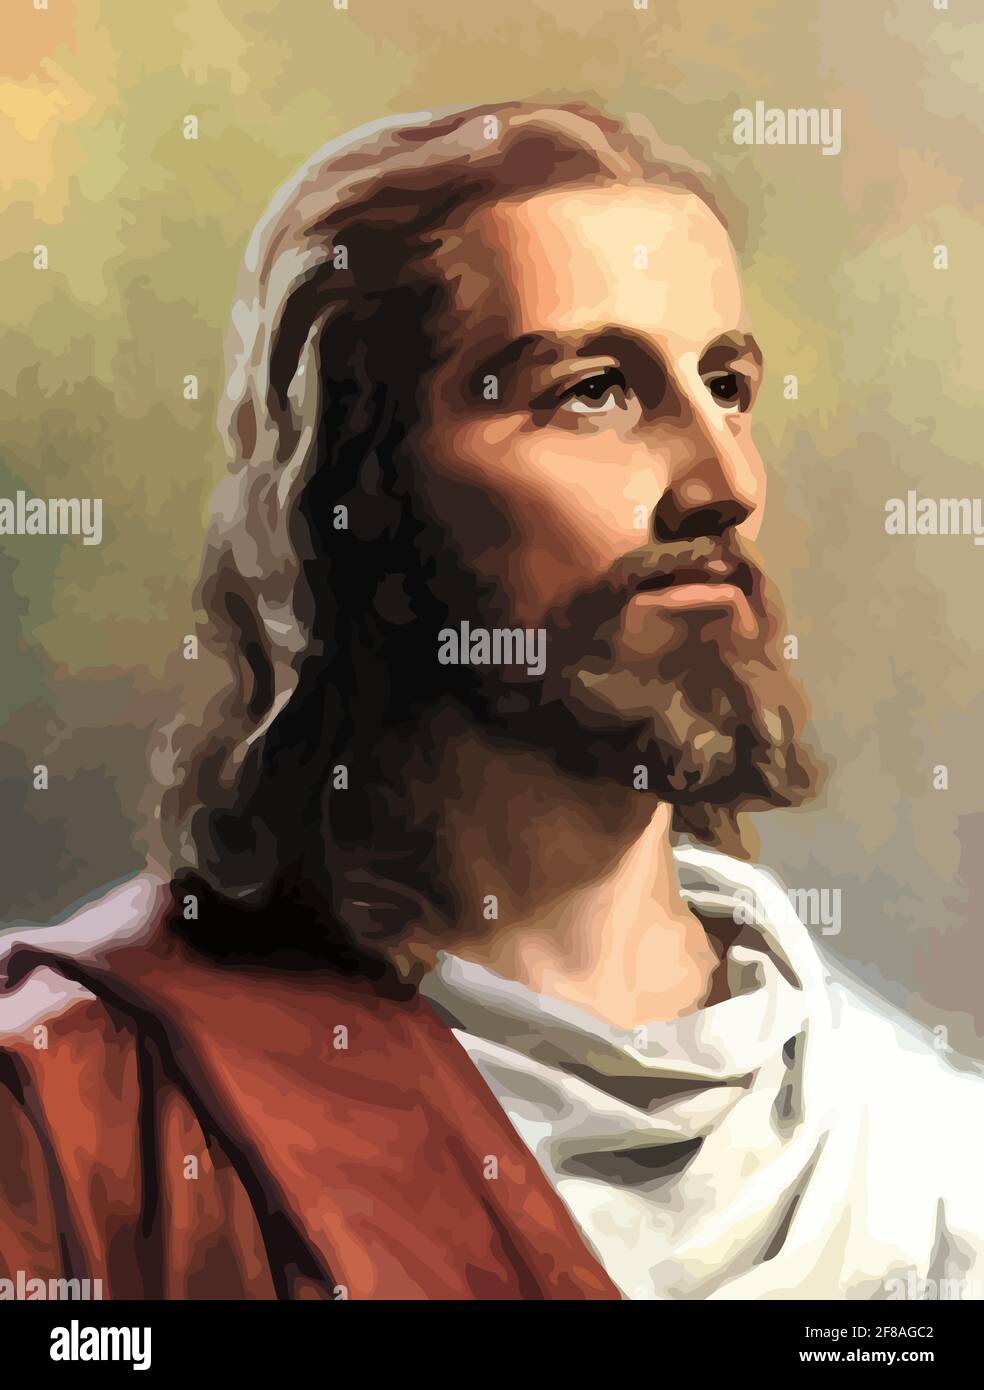 holy jesus christ illustration Stock Photo - Alamy